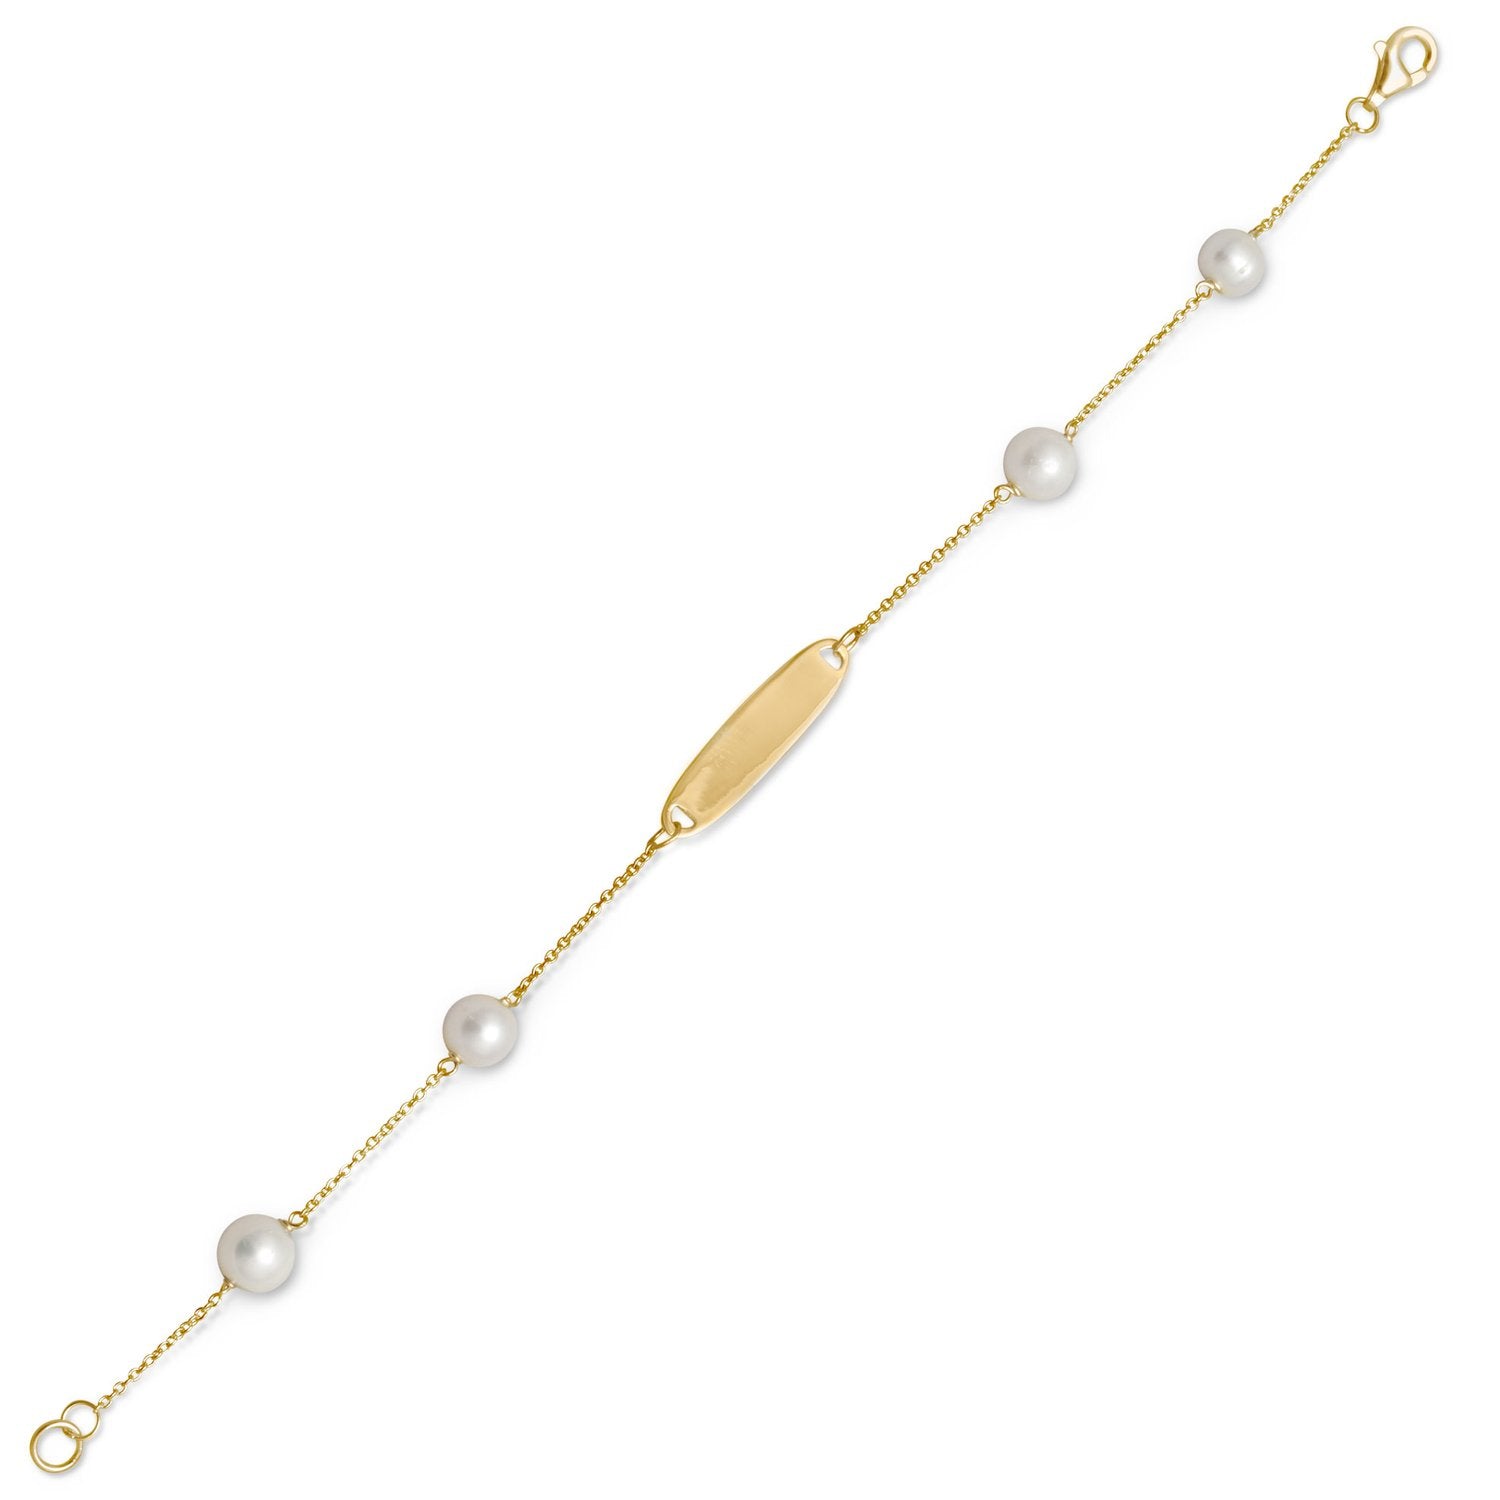 14 Karat Gold Plated ID Bracelet with White Cultured Freshwater Pearls - Joyeria Lady